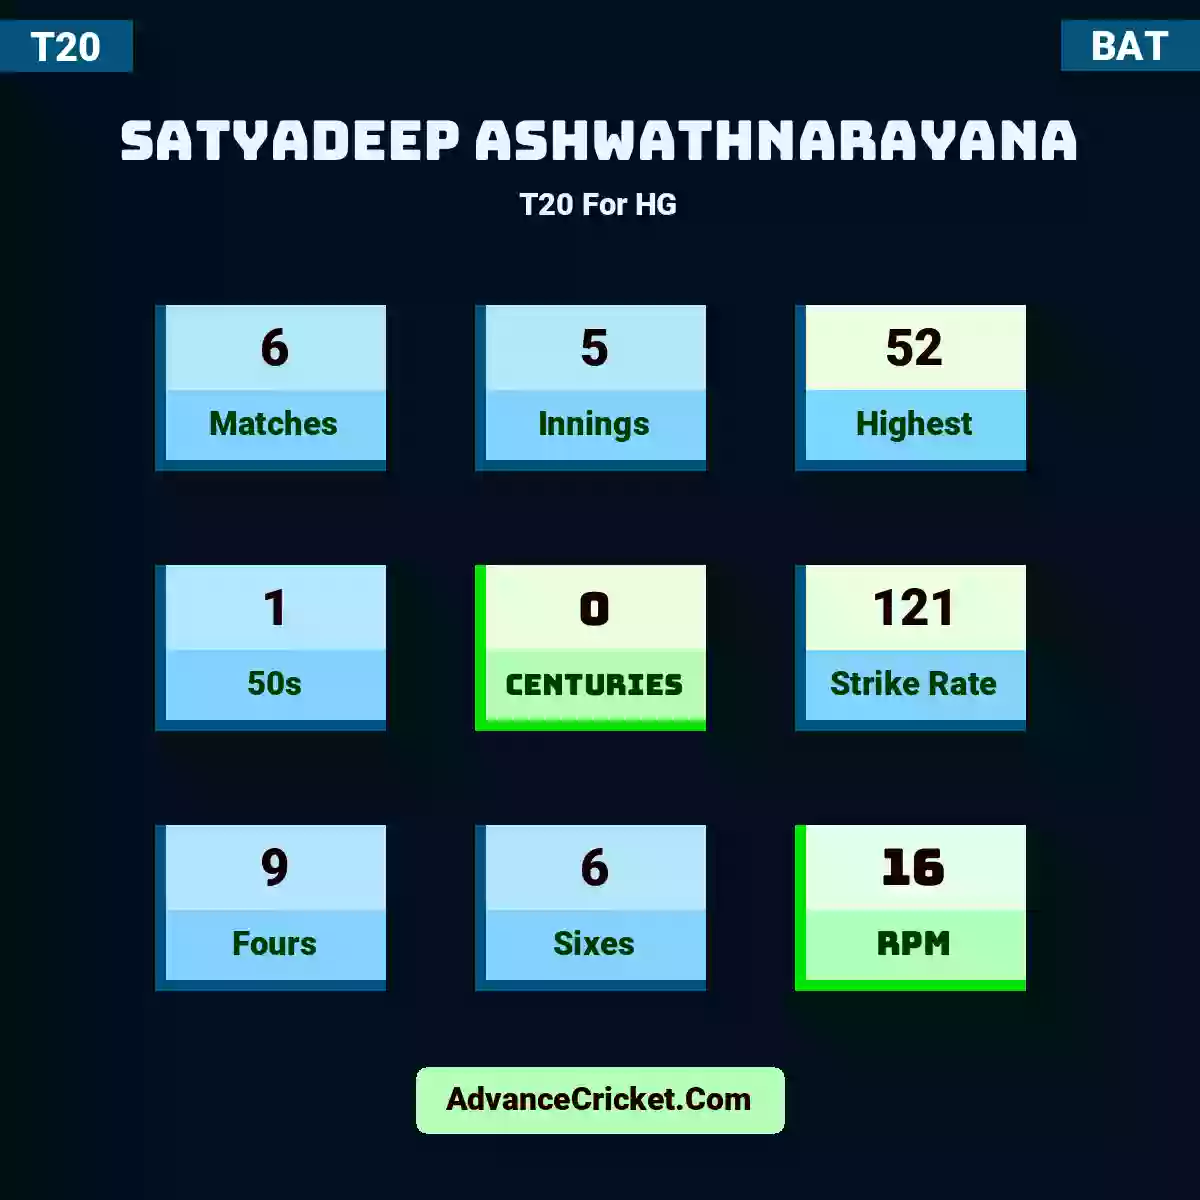 Satyadeep Ashwathnarayana T20  For HG, Satyadeep Ashwathnarayana played 6 matches, scored 52 runs as highest, 1 half-centuries, and 0 centuries, with a strike rate of 121. S.Ashwathnarayana hit 9 fours and 6 sixes, with an RPM of 16.